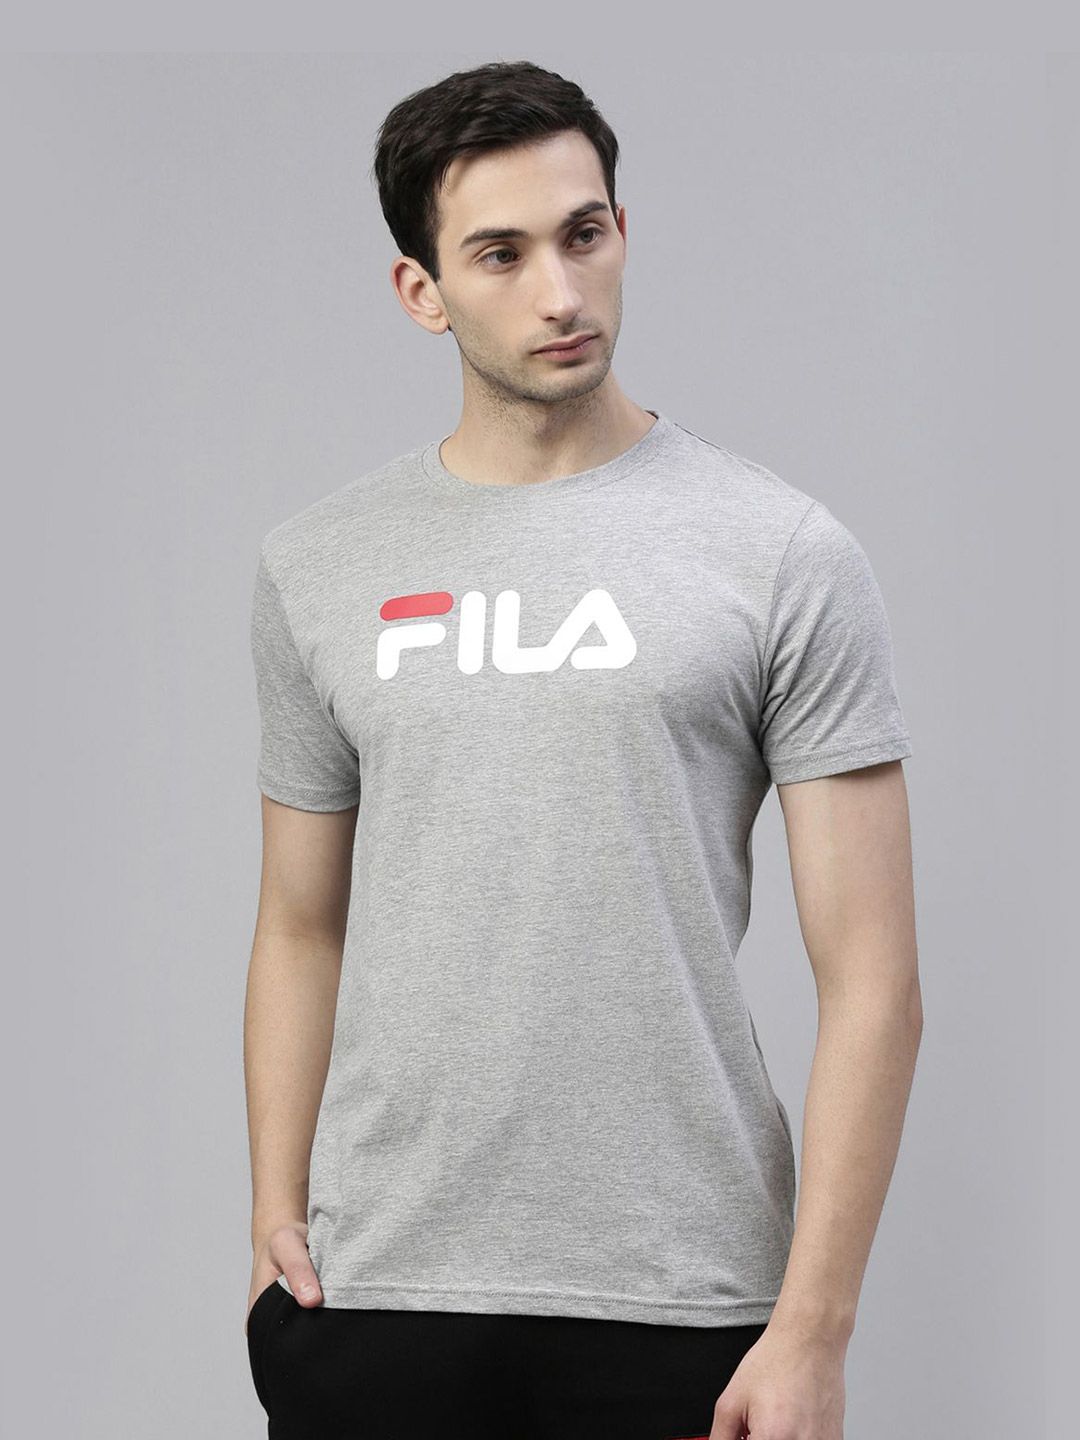 fila Merchandise: Buy Official fila Jerseys & T Shirts Online | shop